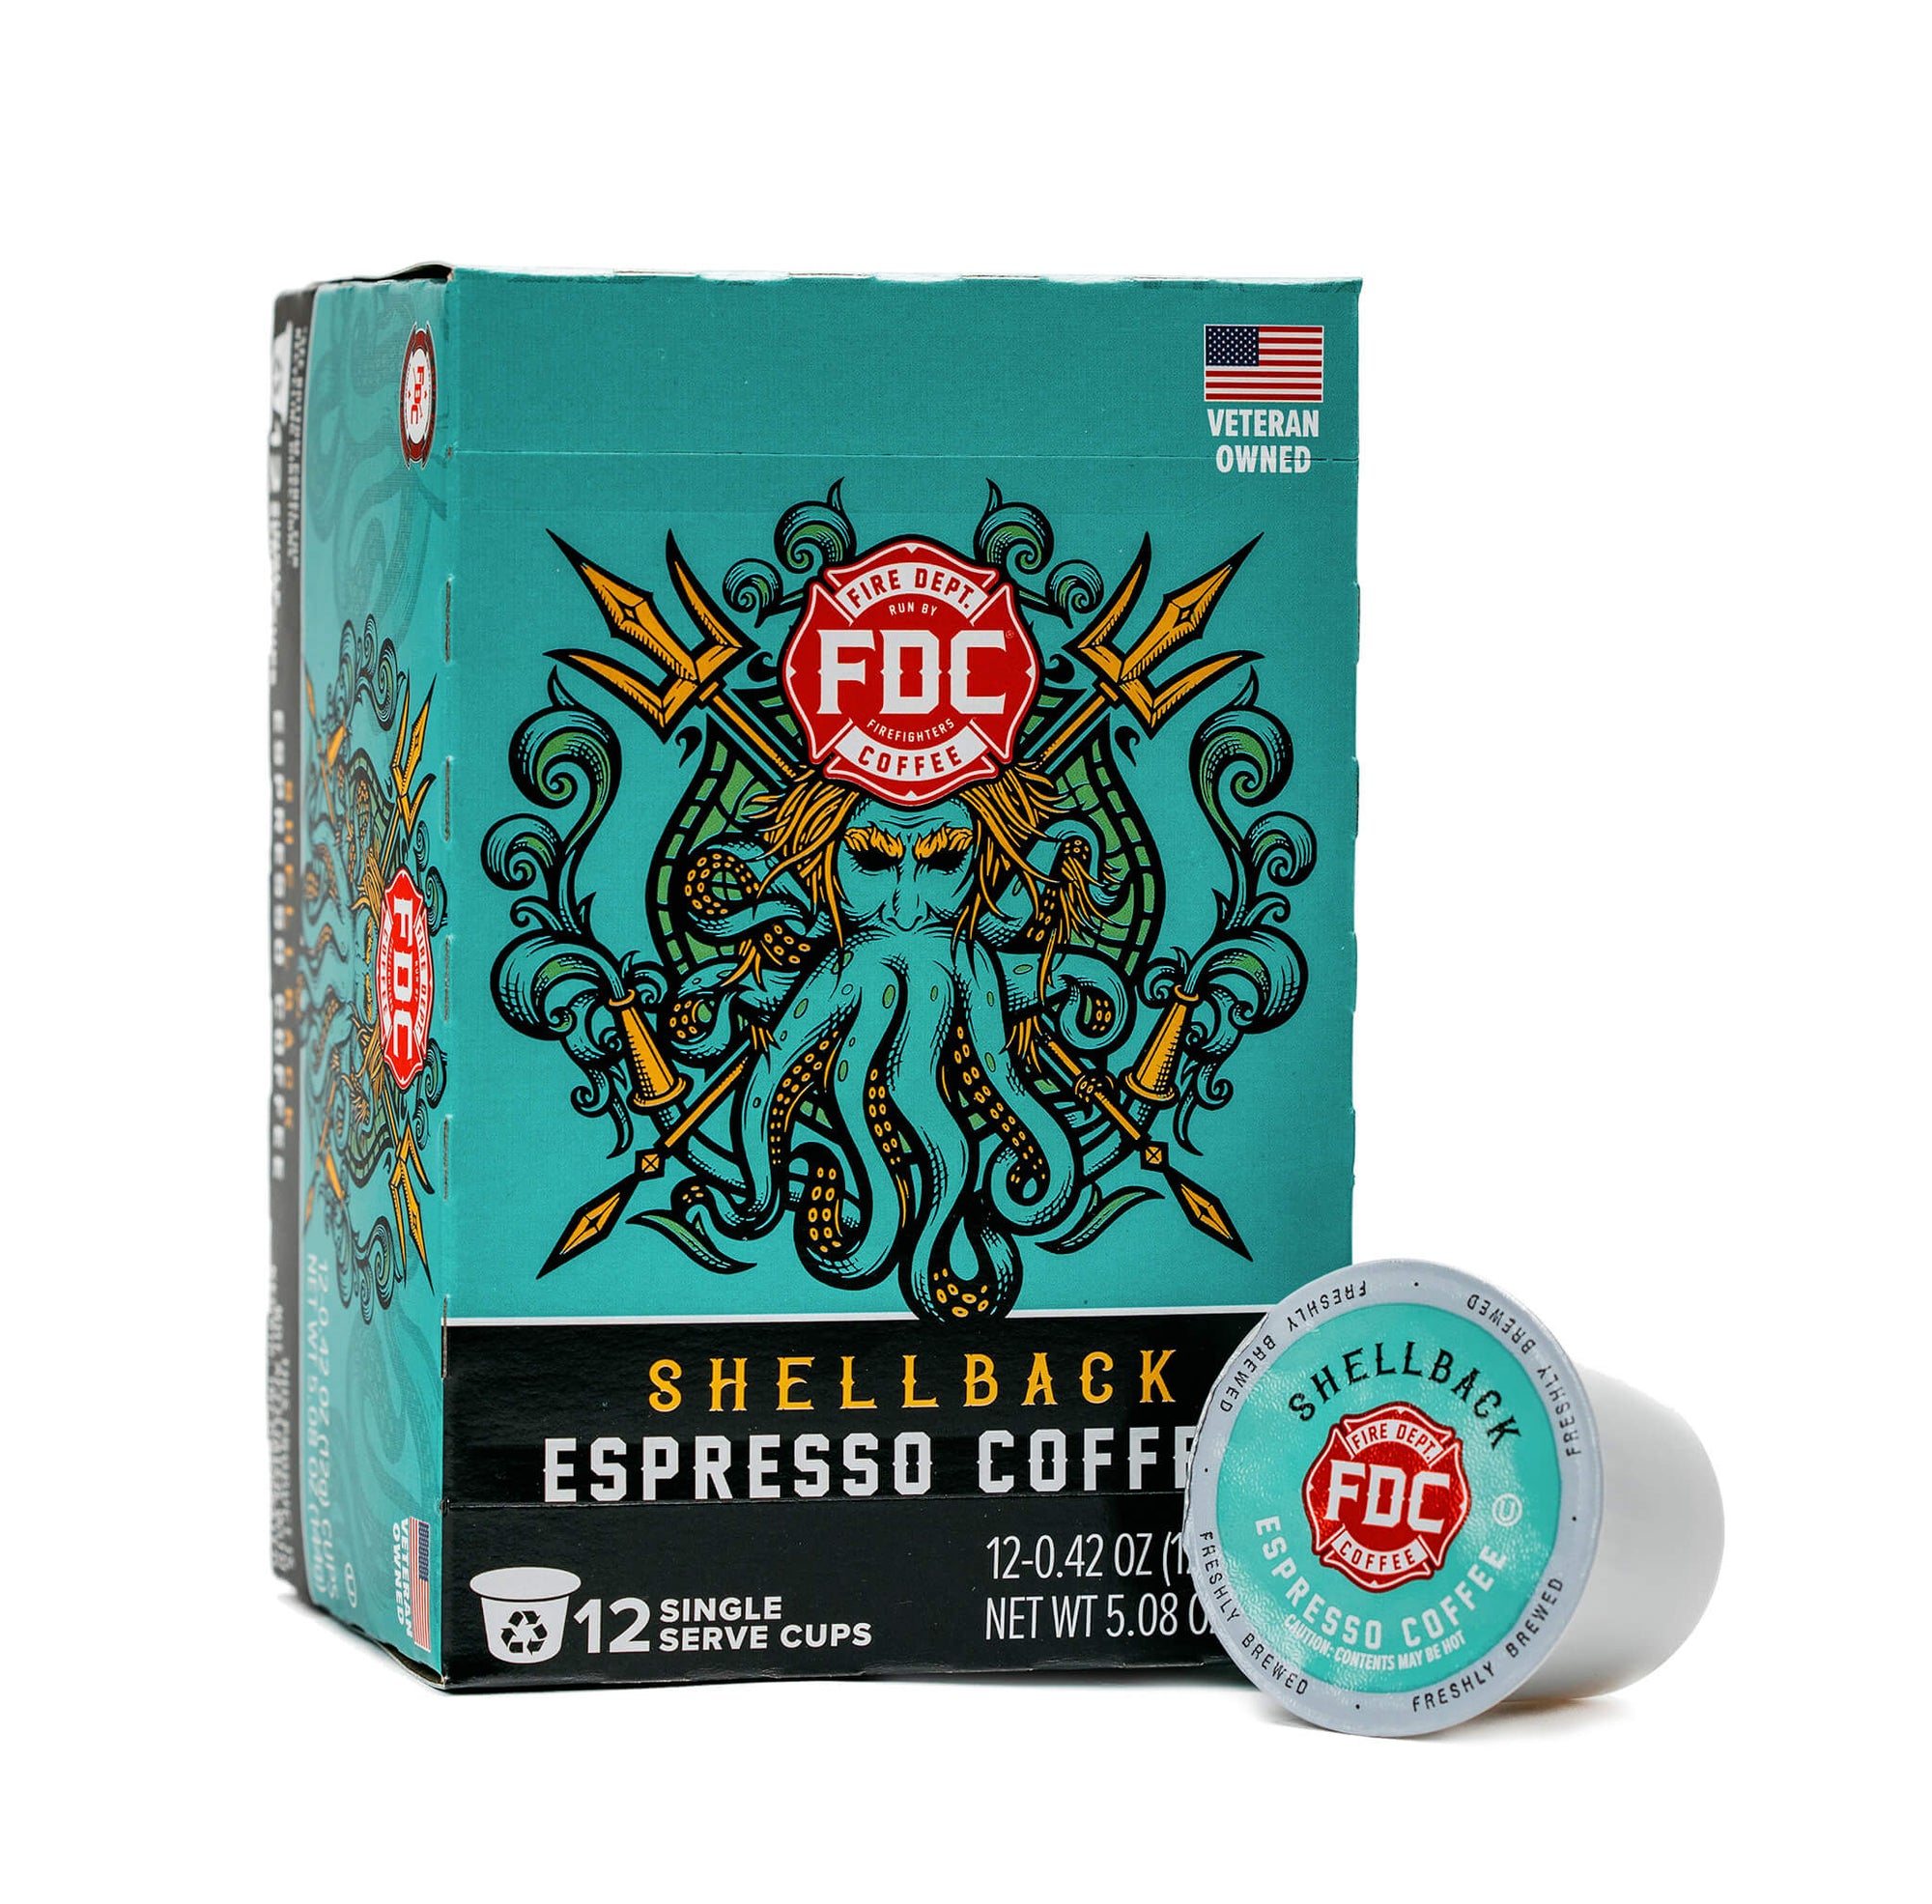 12 count box of Fire Department Coffee's Shellback Espresso Coffee Pods